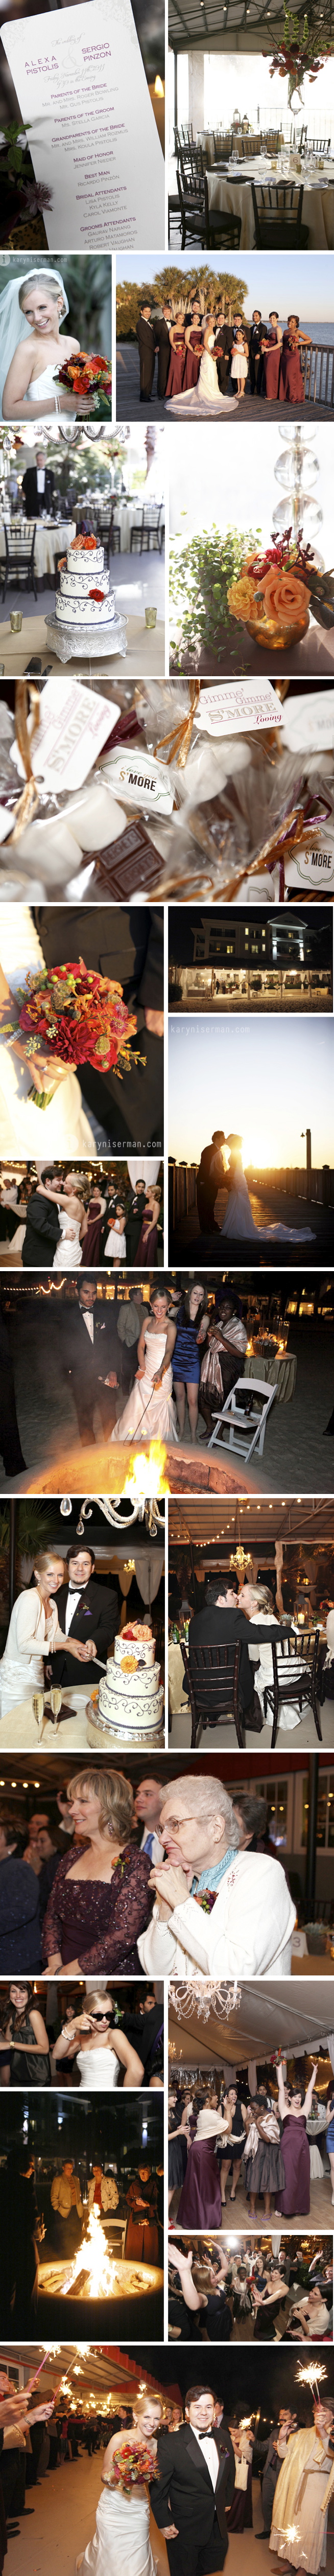 wedding blogs | Charleston Wedings